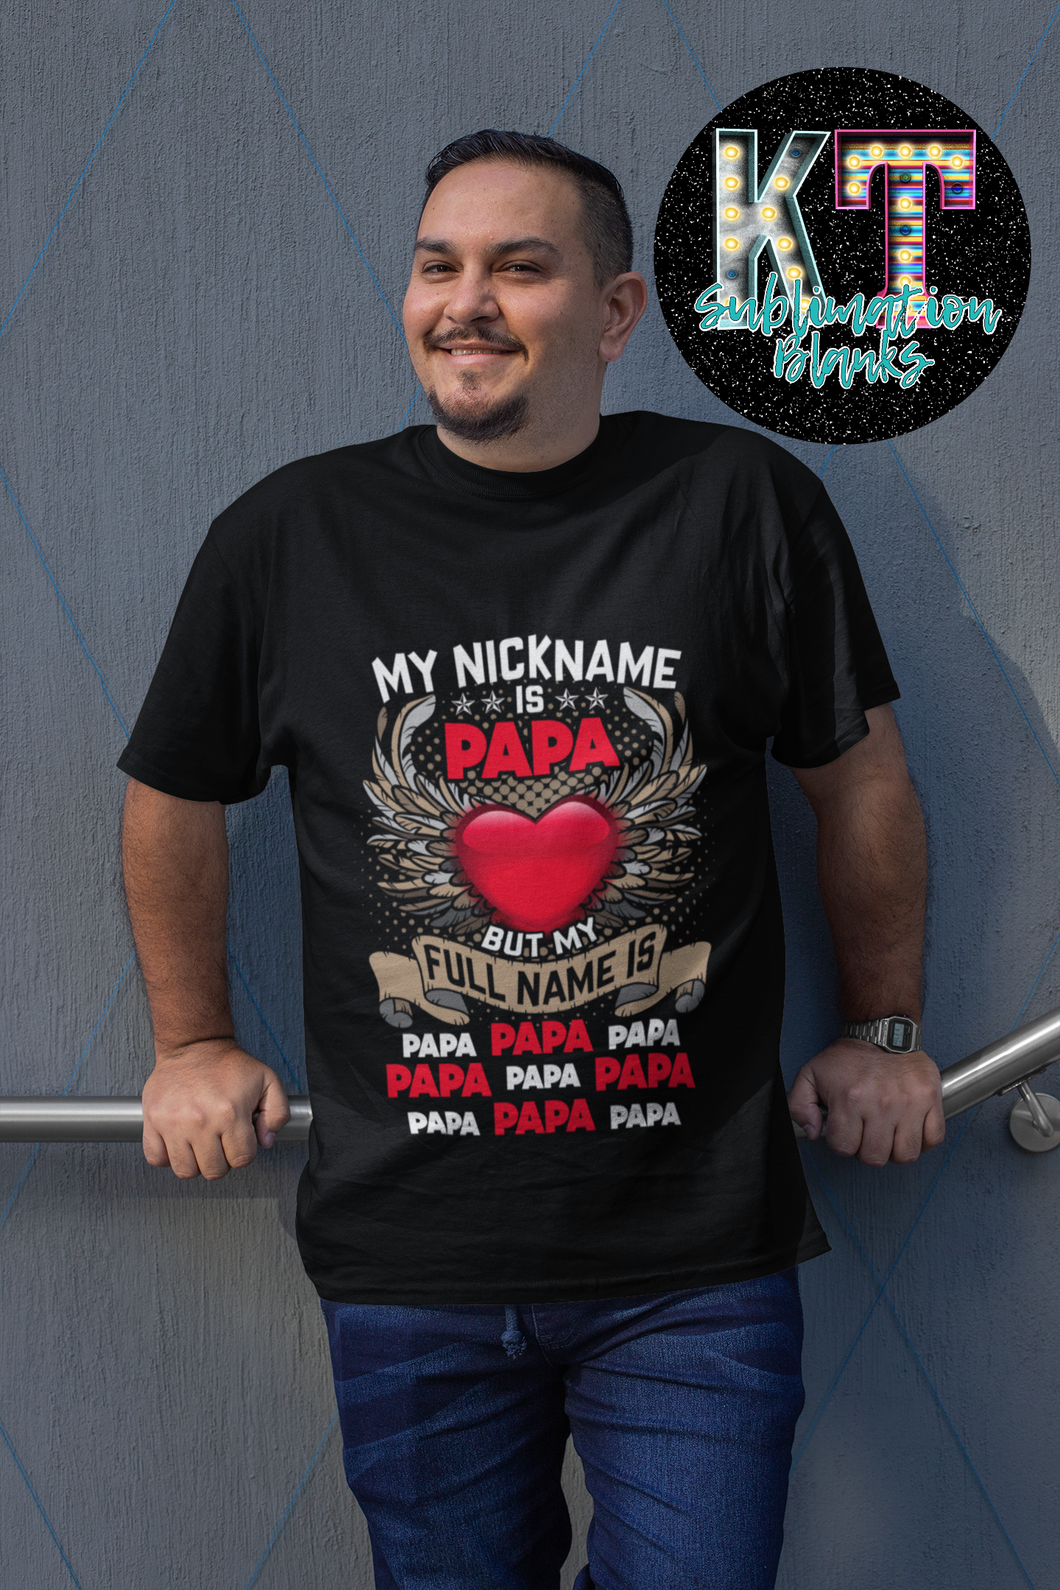 My nickname is Papa DTF